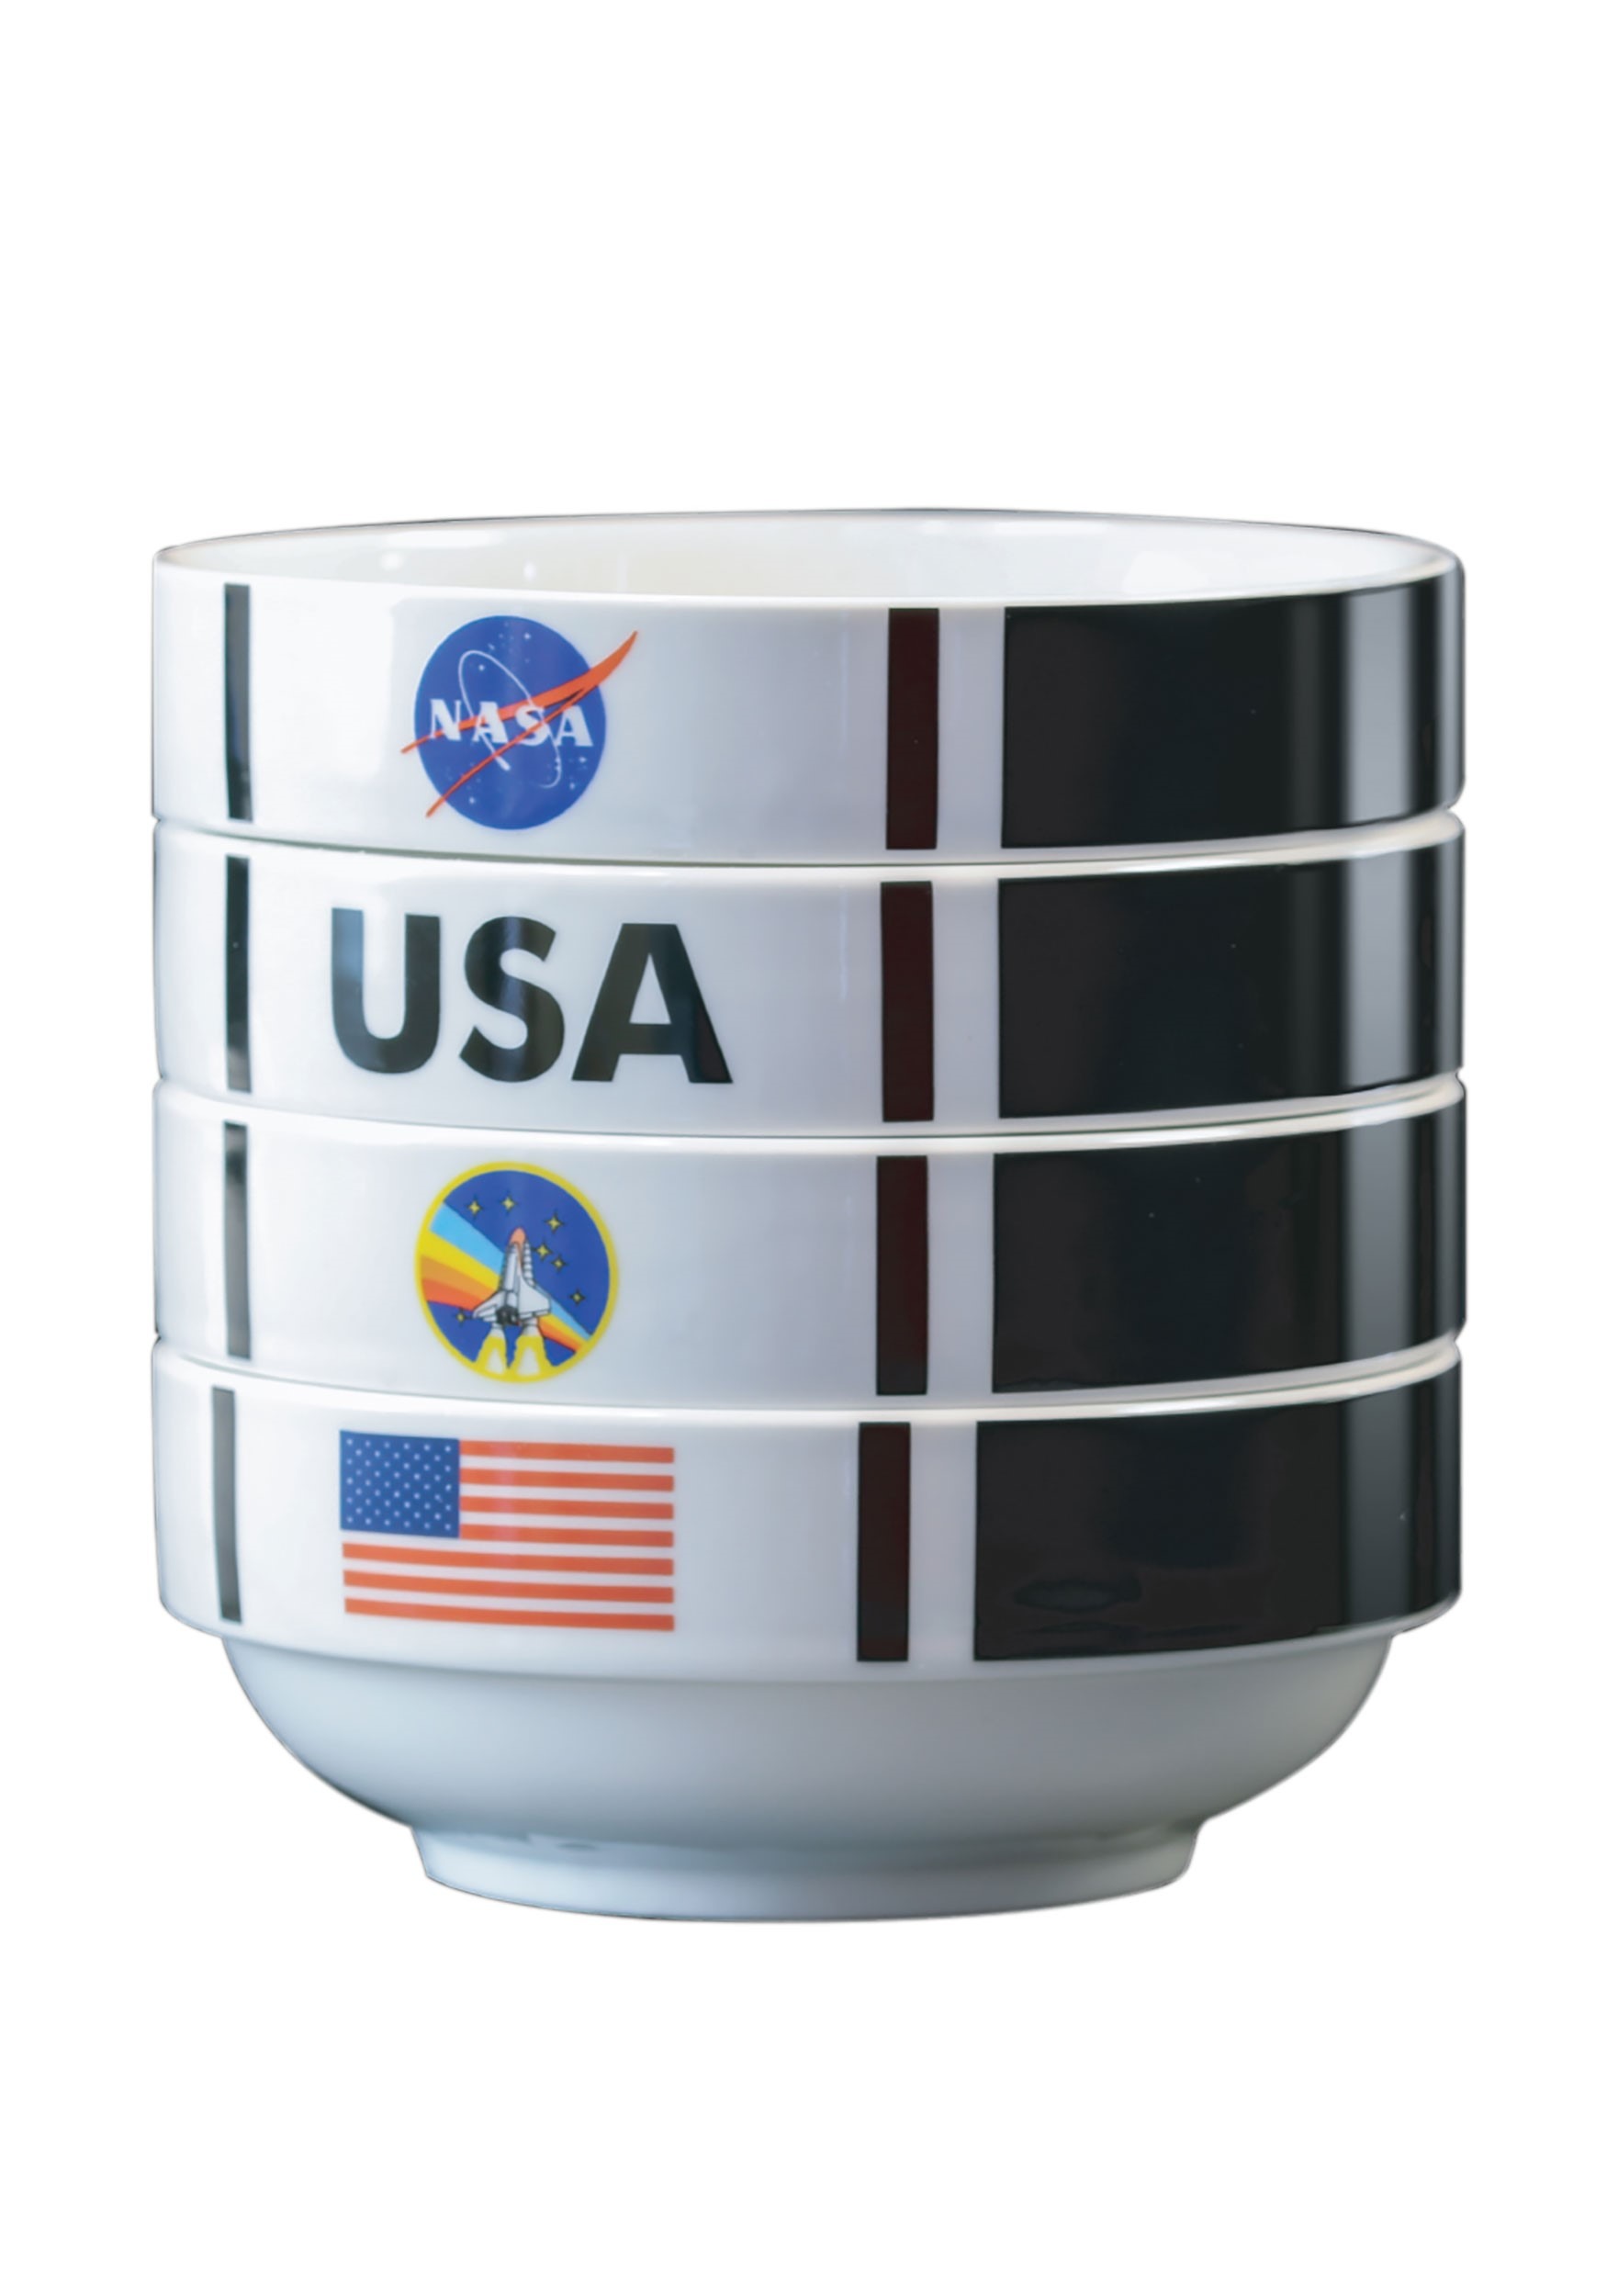 NASA Shuttle Stackable Bowl Set